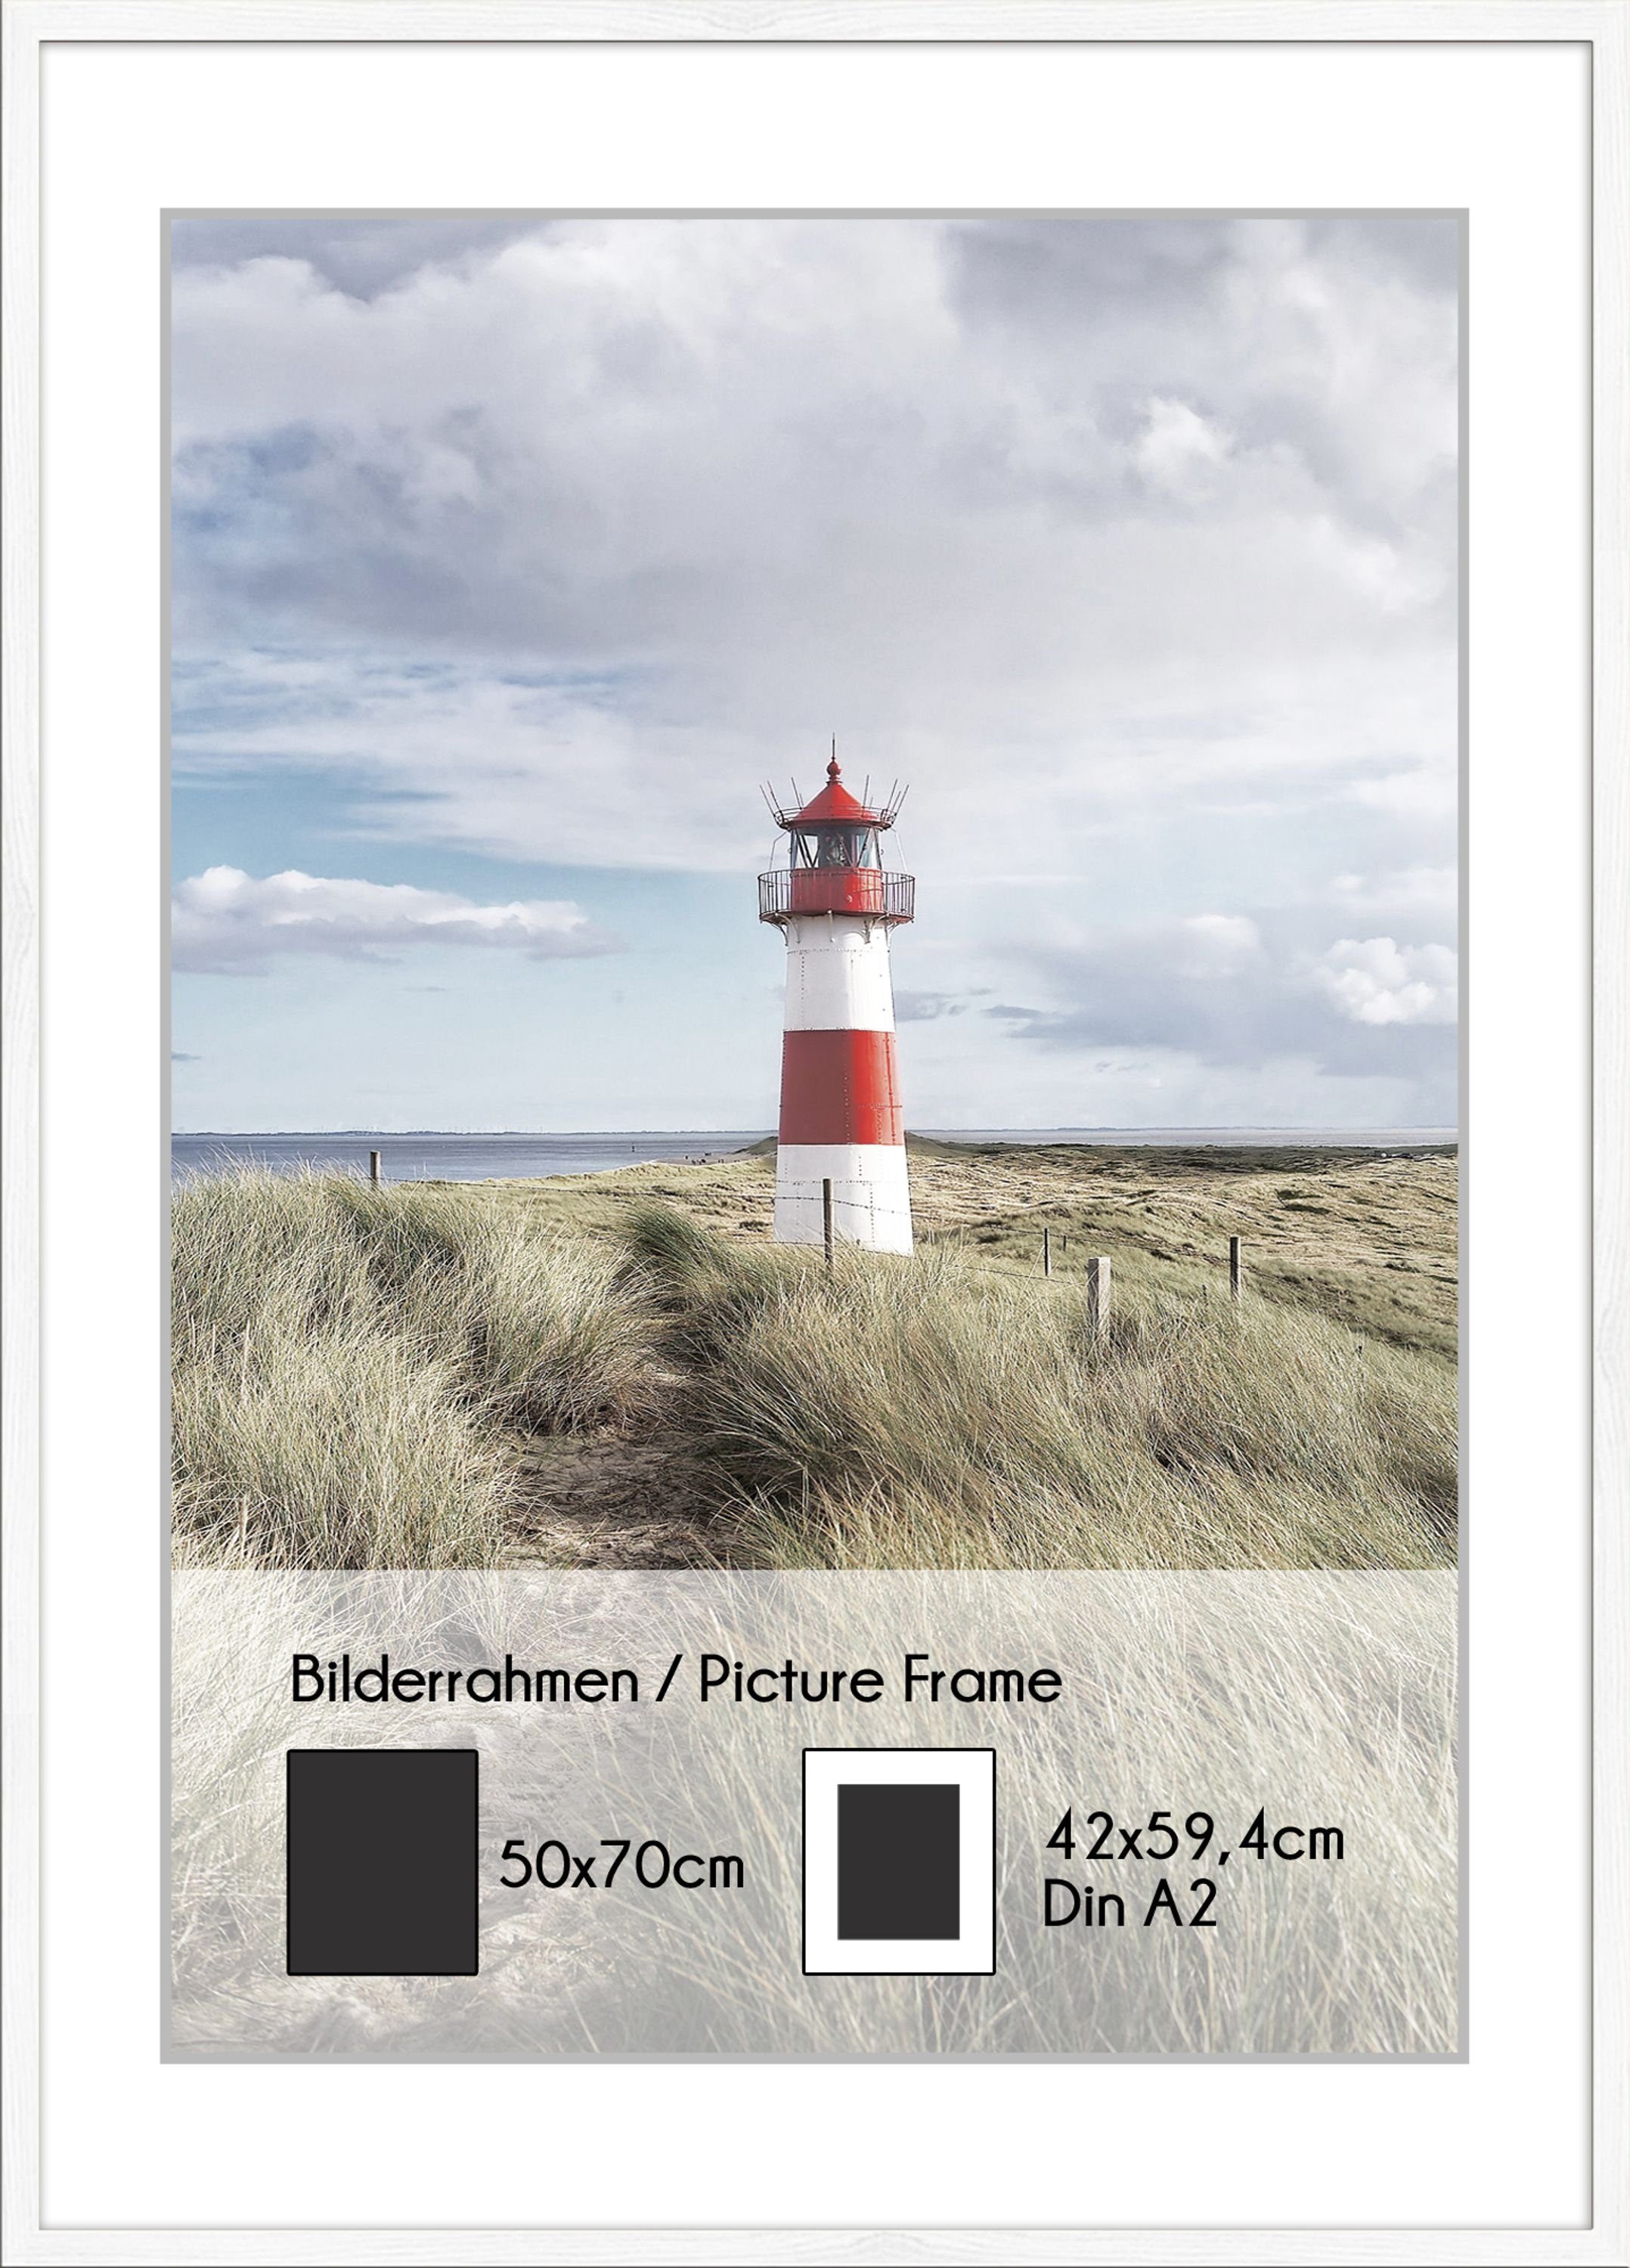 artissimo Bilderrahmen Bilder-Rahmen für Passepartout Poster Weiß inkl. 50x70cm DinA2 Matt